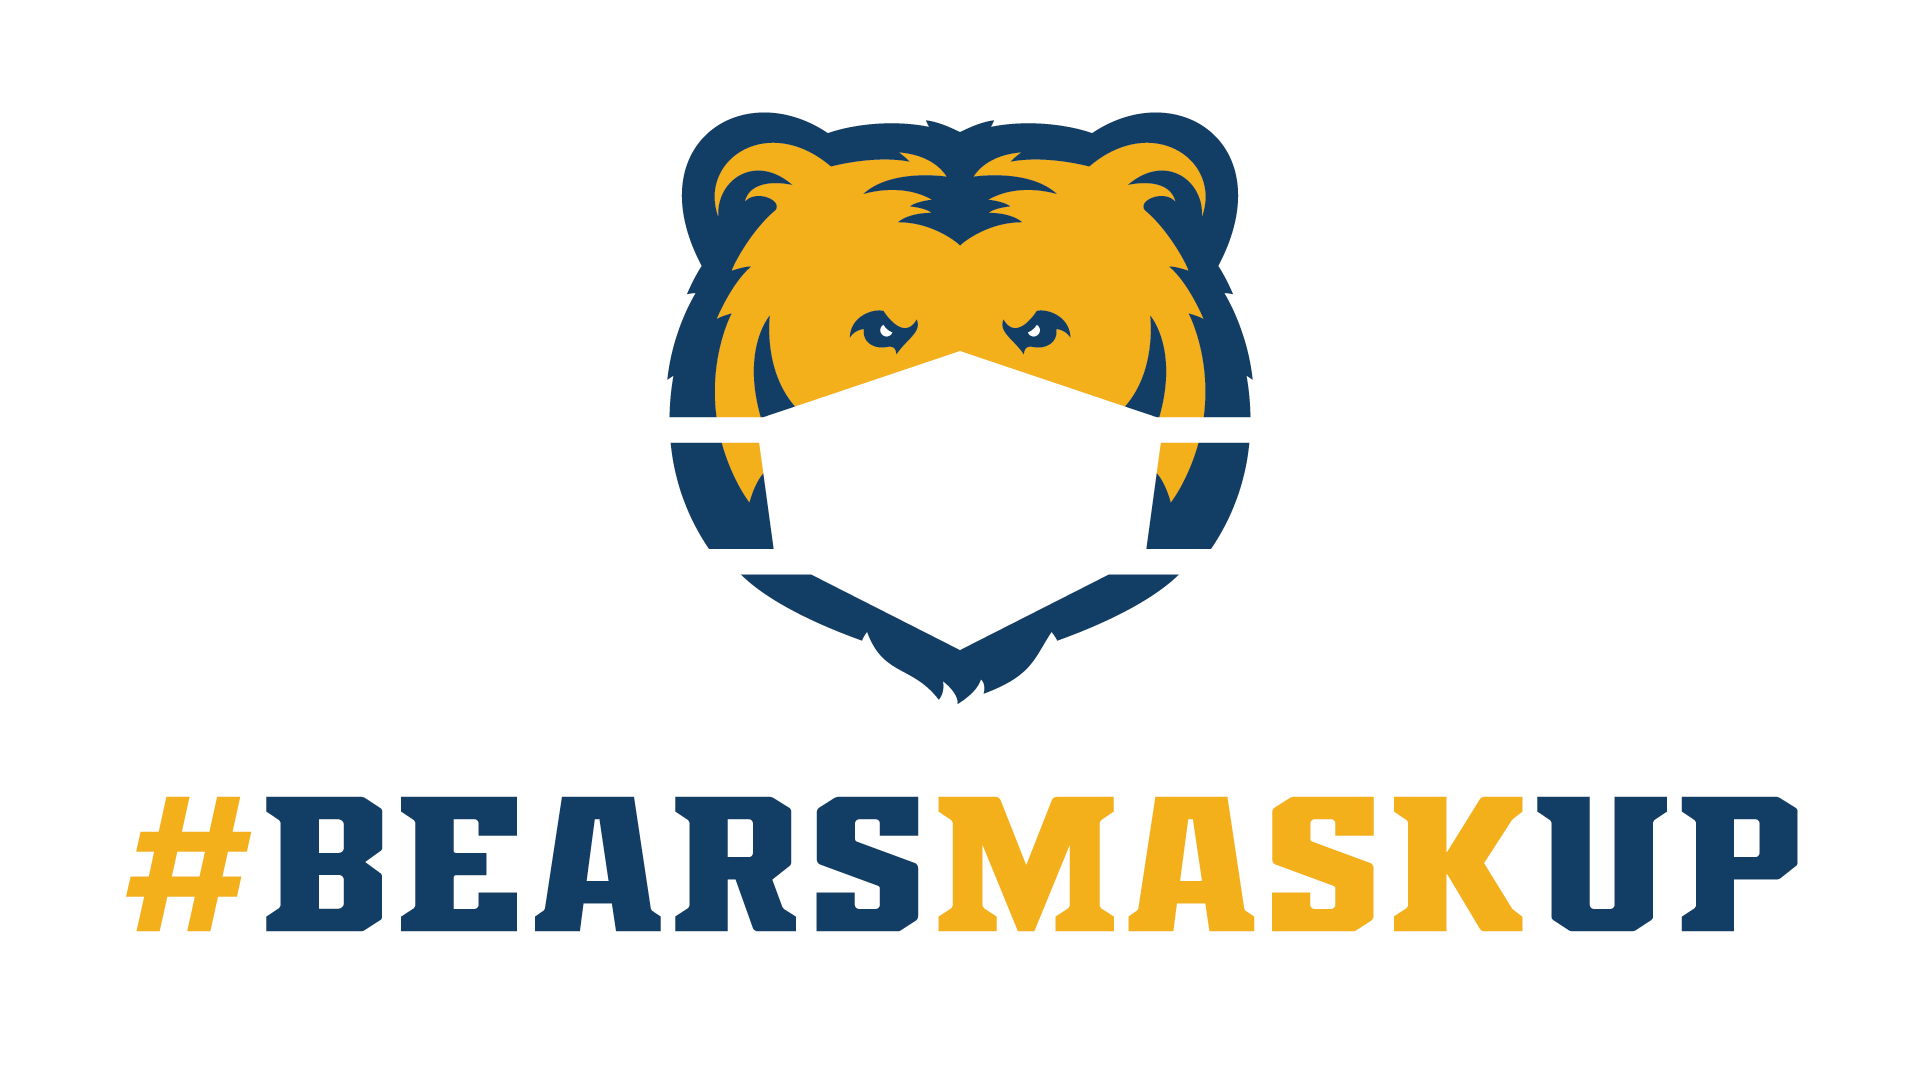 Bears Mask UP